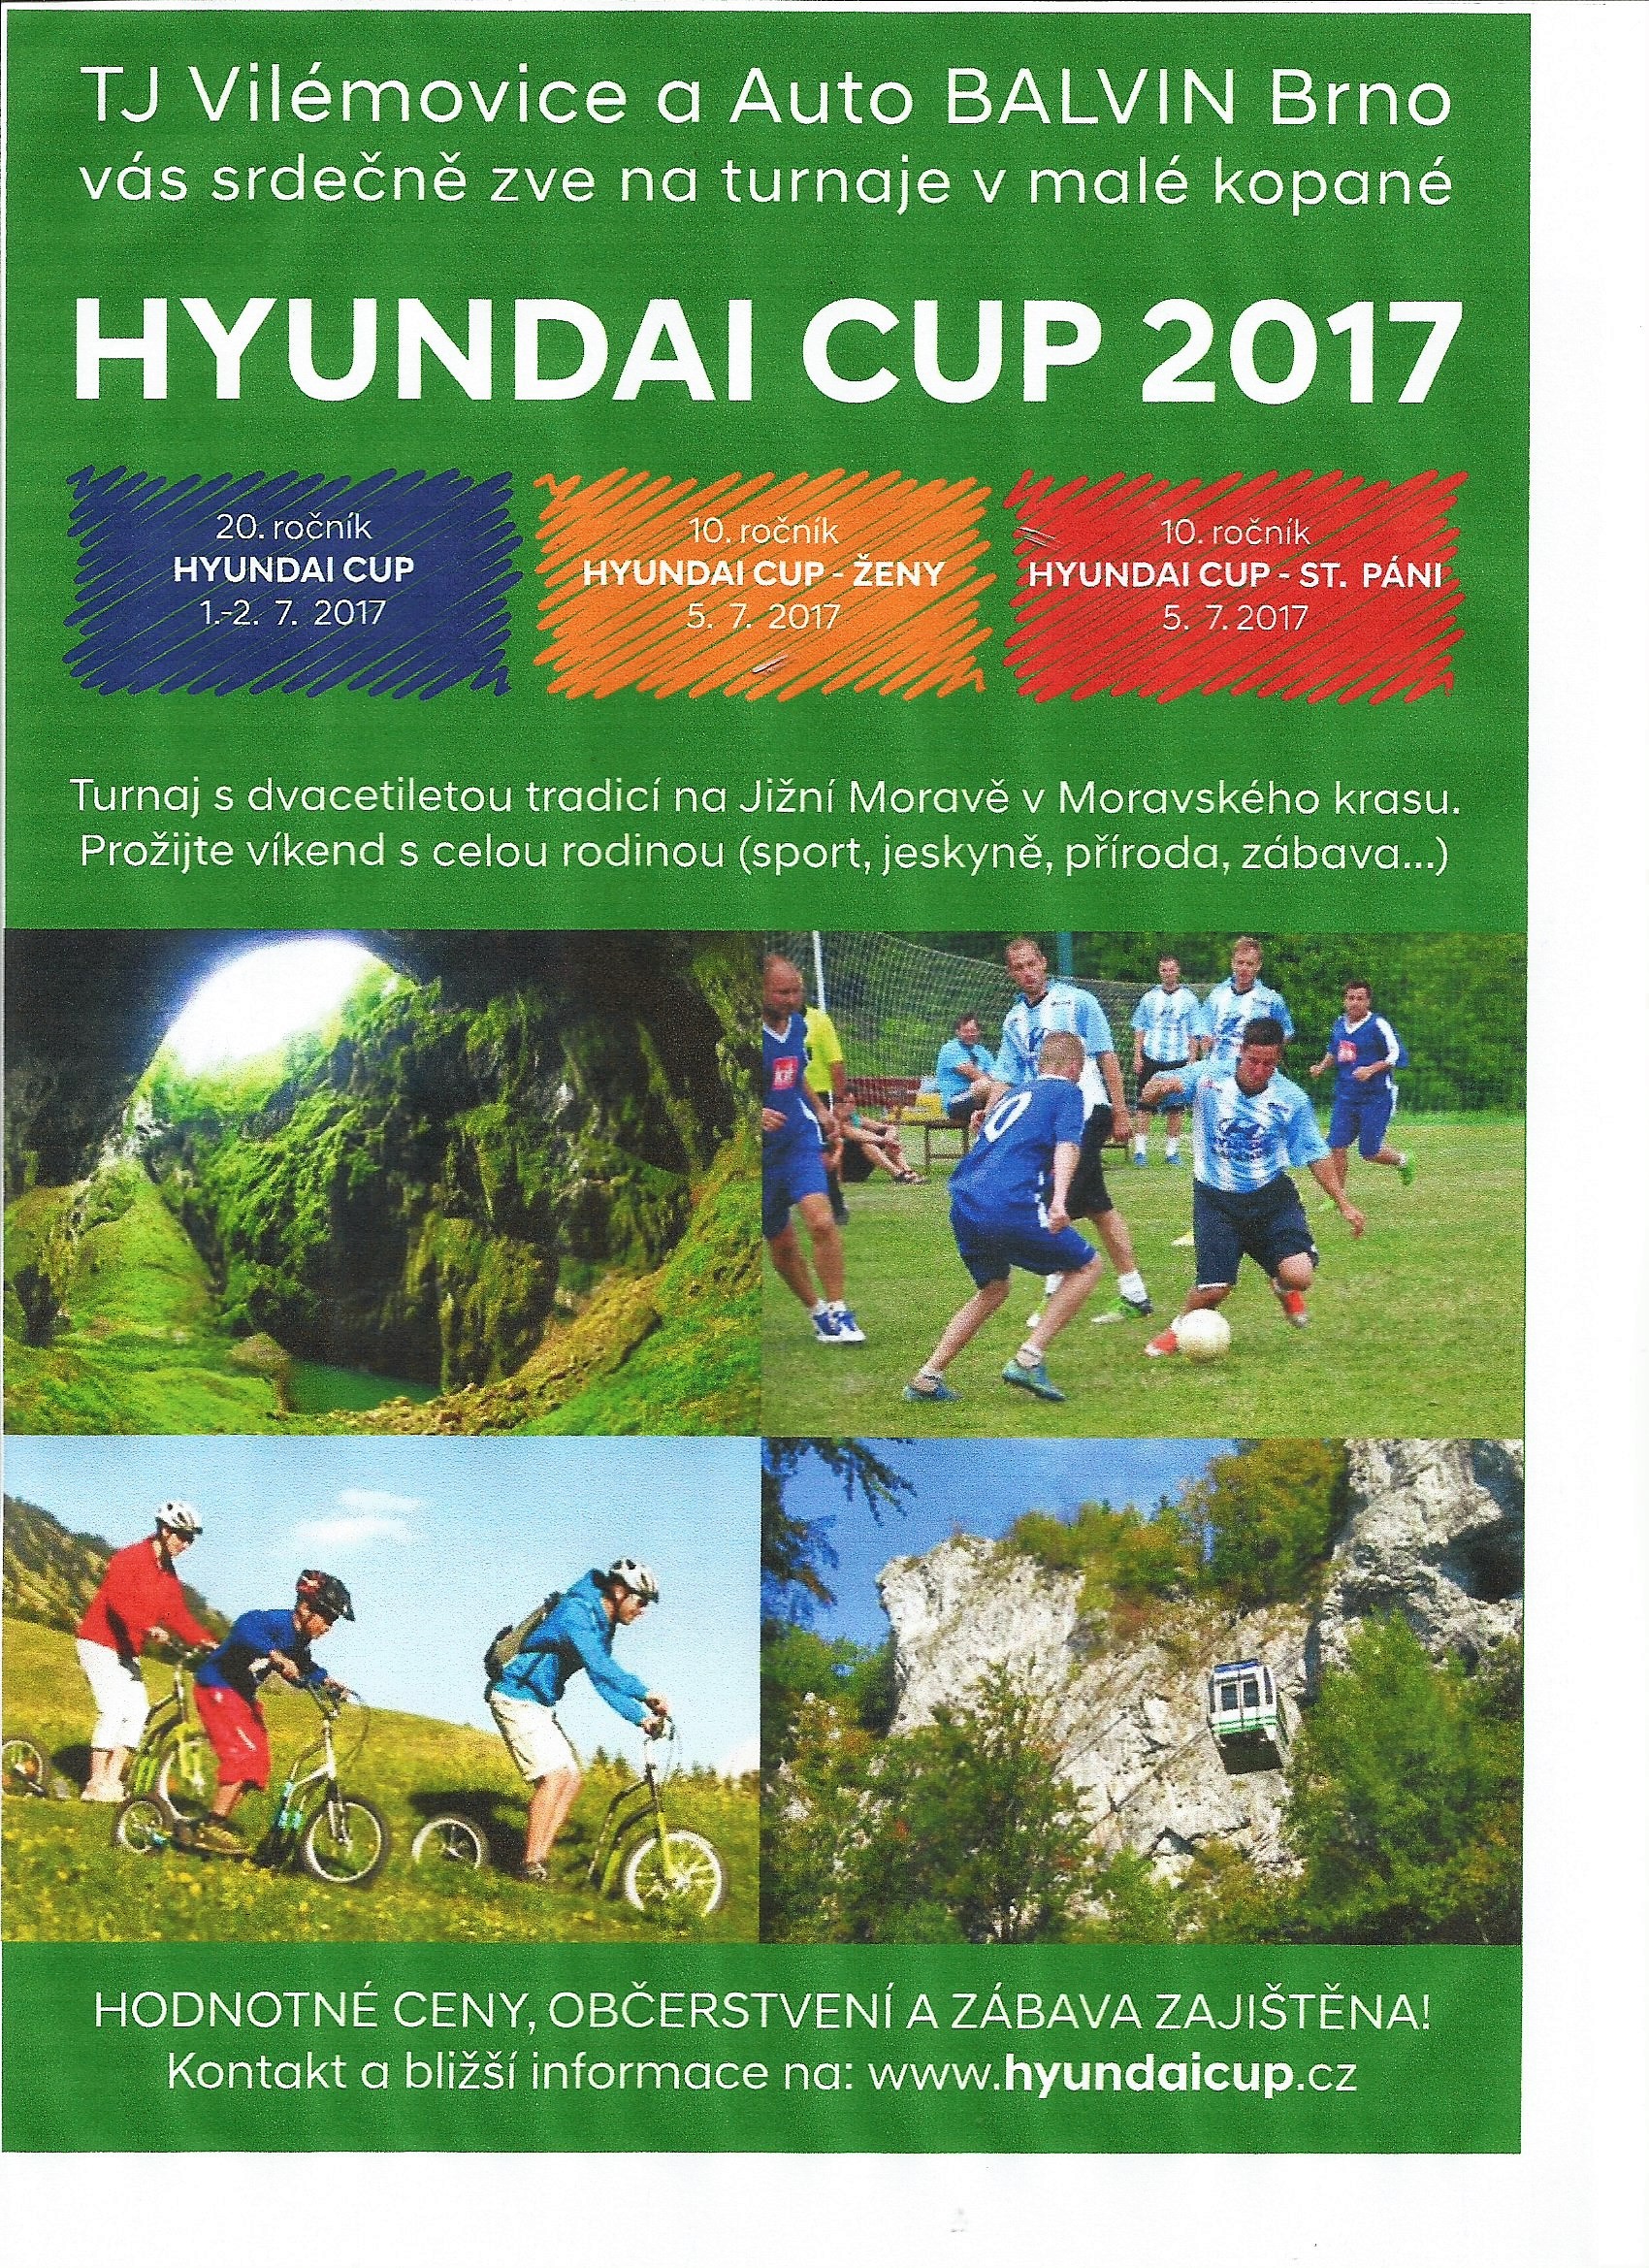 Hyundai Cup 2017